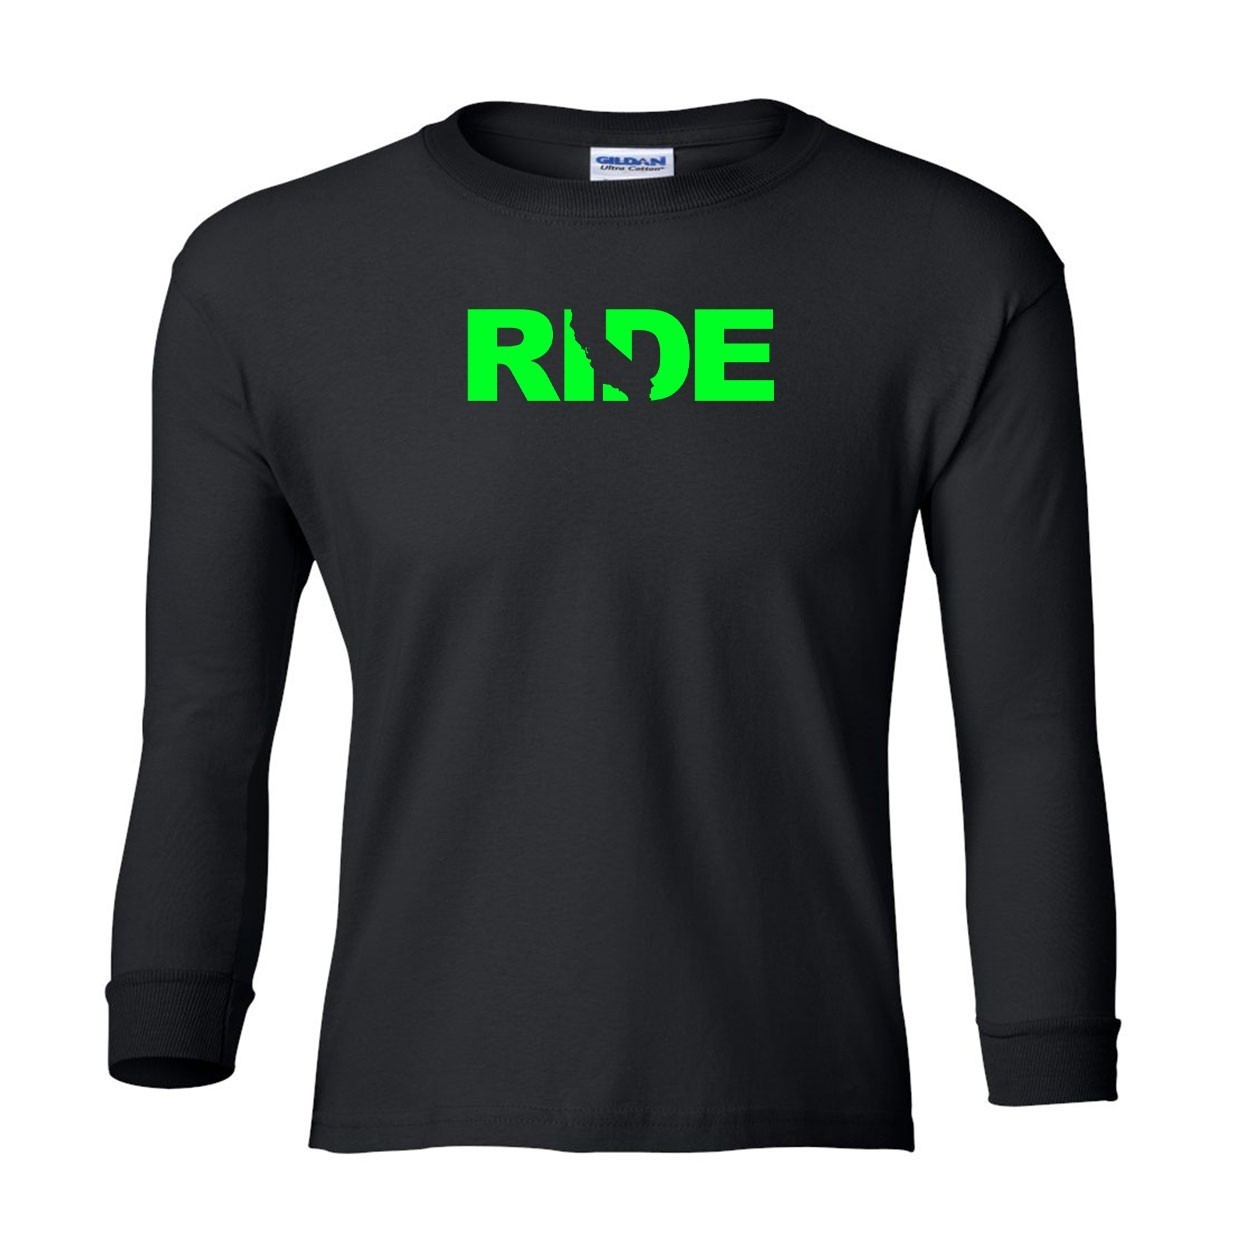 Ride California Classic Youth Unisex Long Sleeve T-Shirt Black (Green Logo)